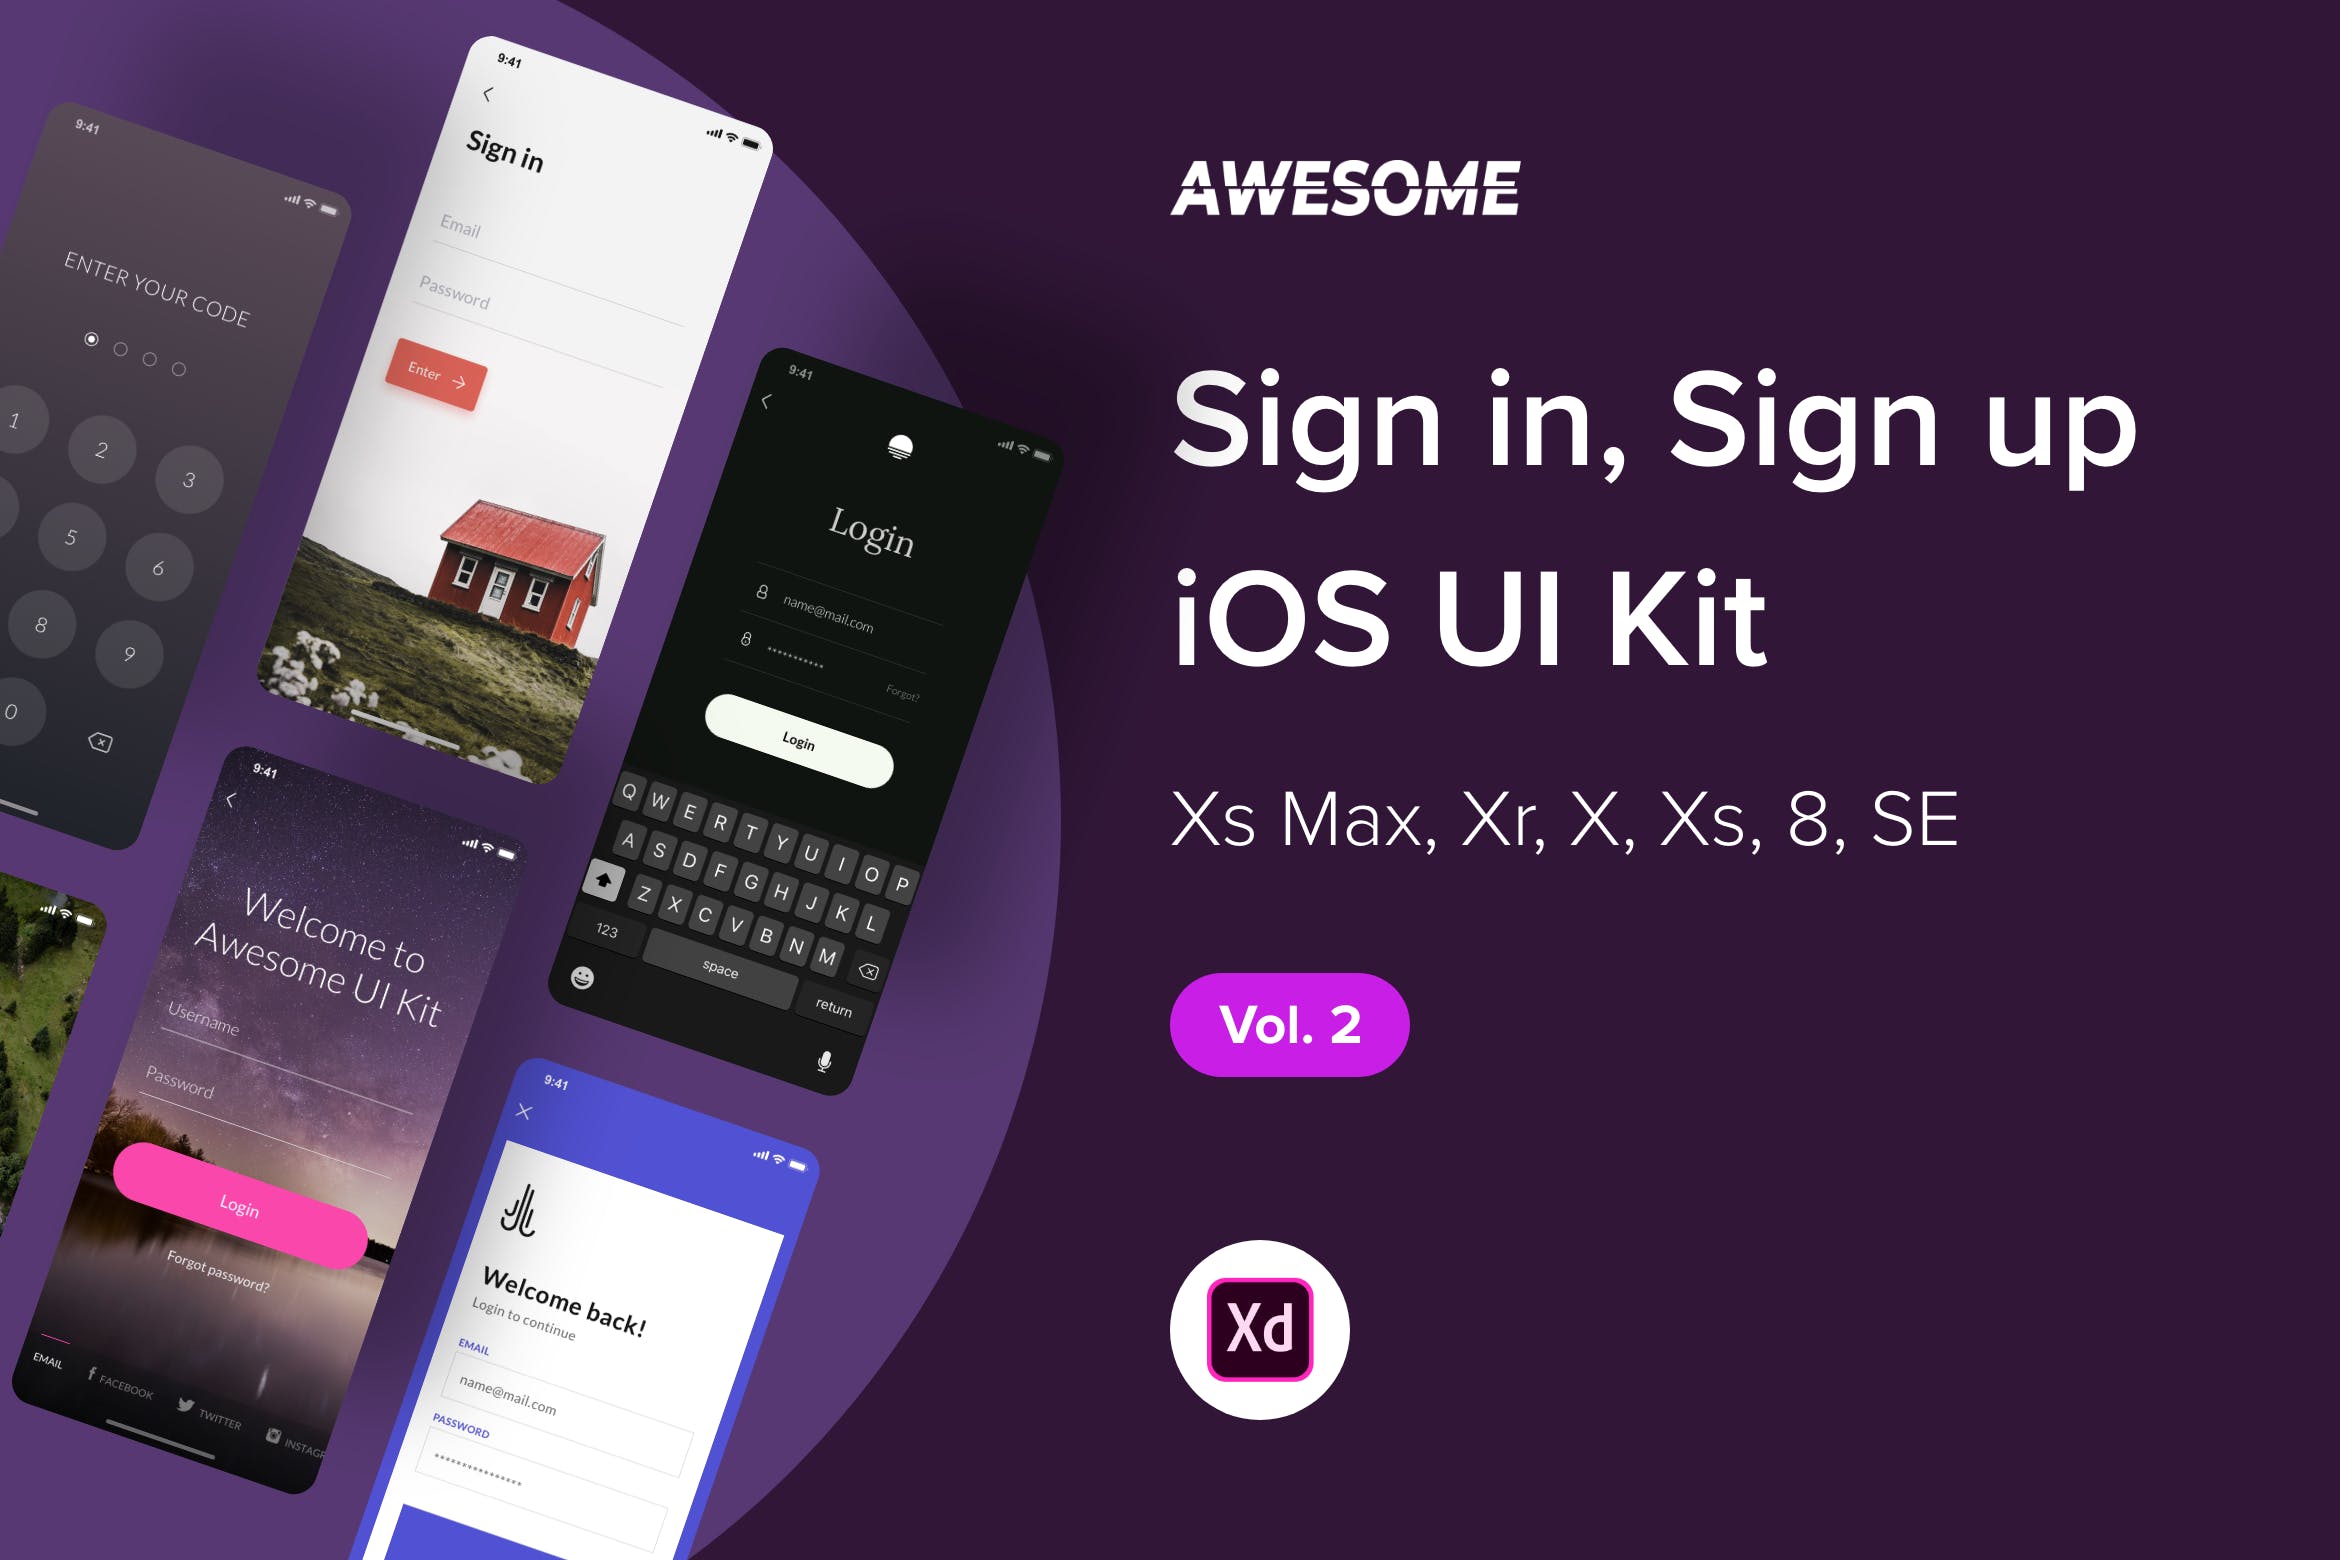 iOS平台APP应用注册登录界面设计XD模板v2 Awesome iOS UI Kit – Sign in, Sign up Vol. 2 (XD)插图